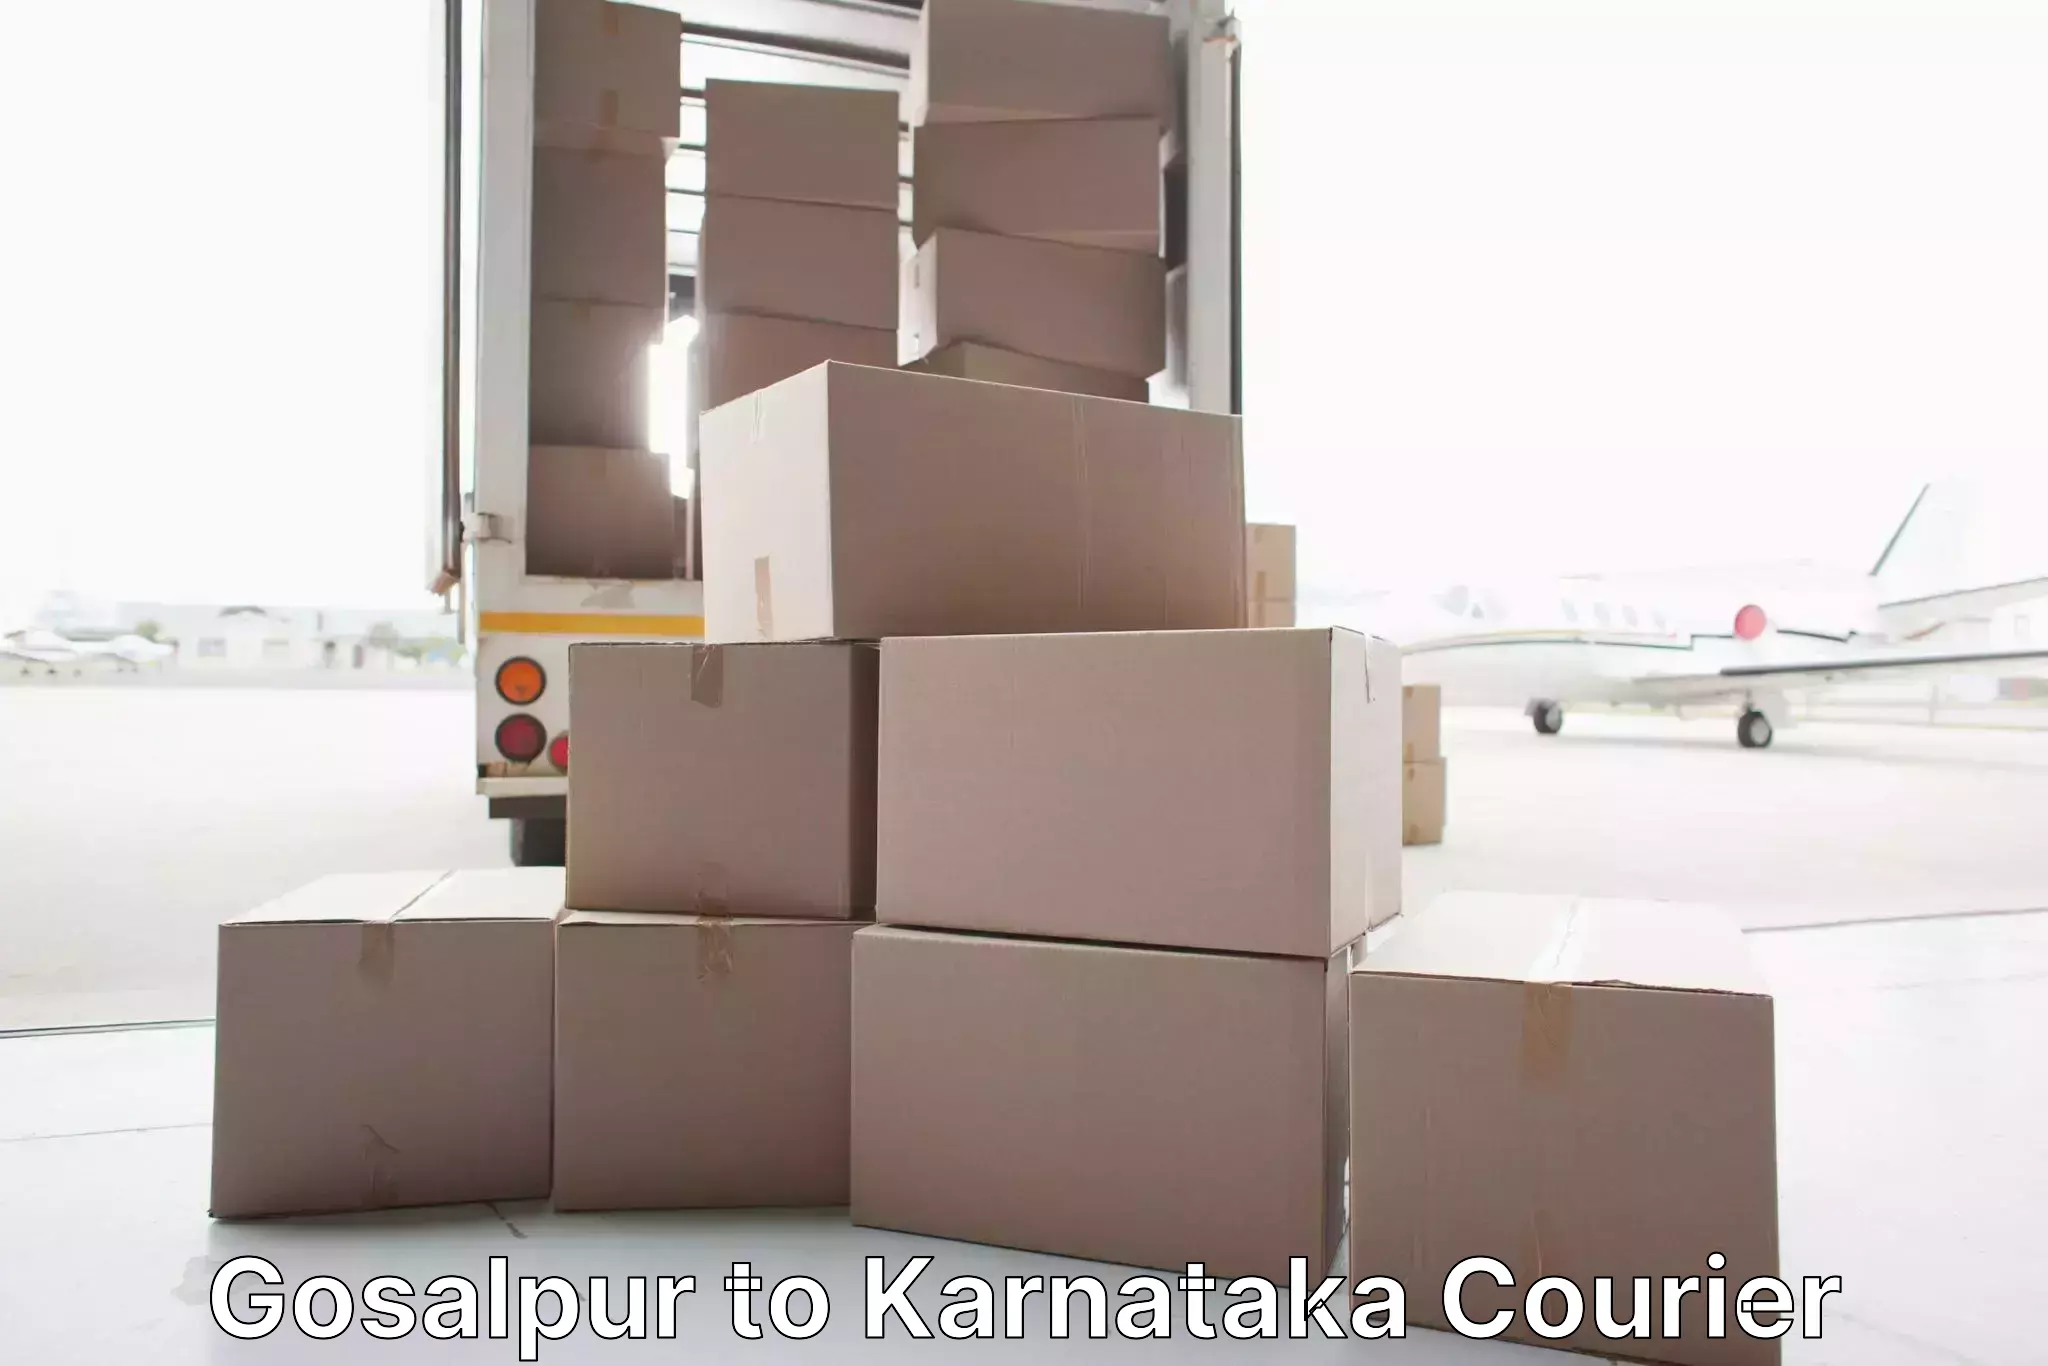 Efficient moving company Gosalpur to Surathkal